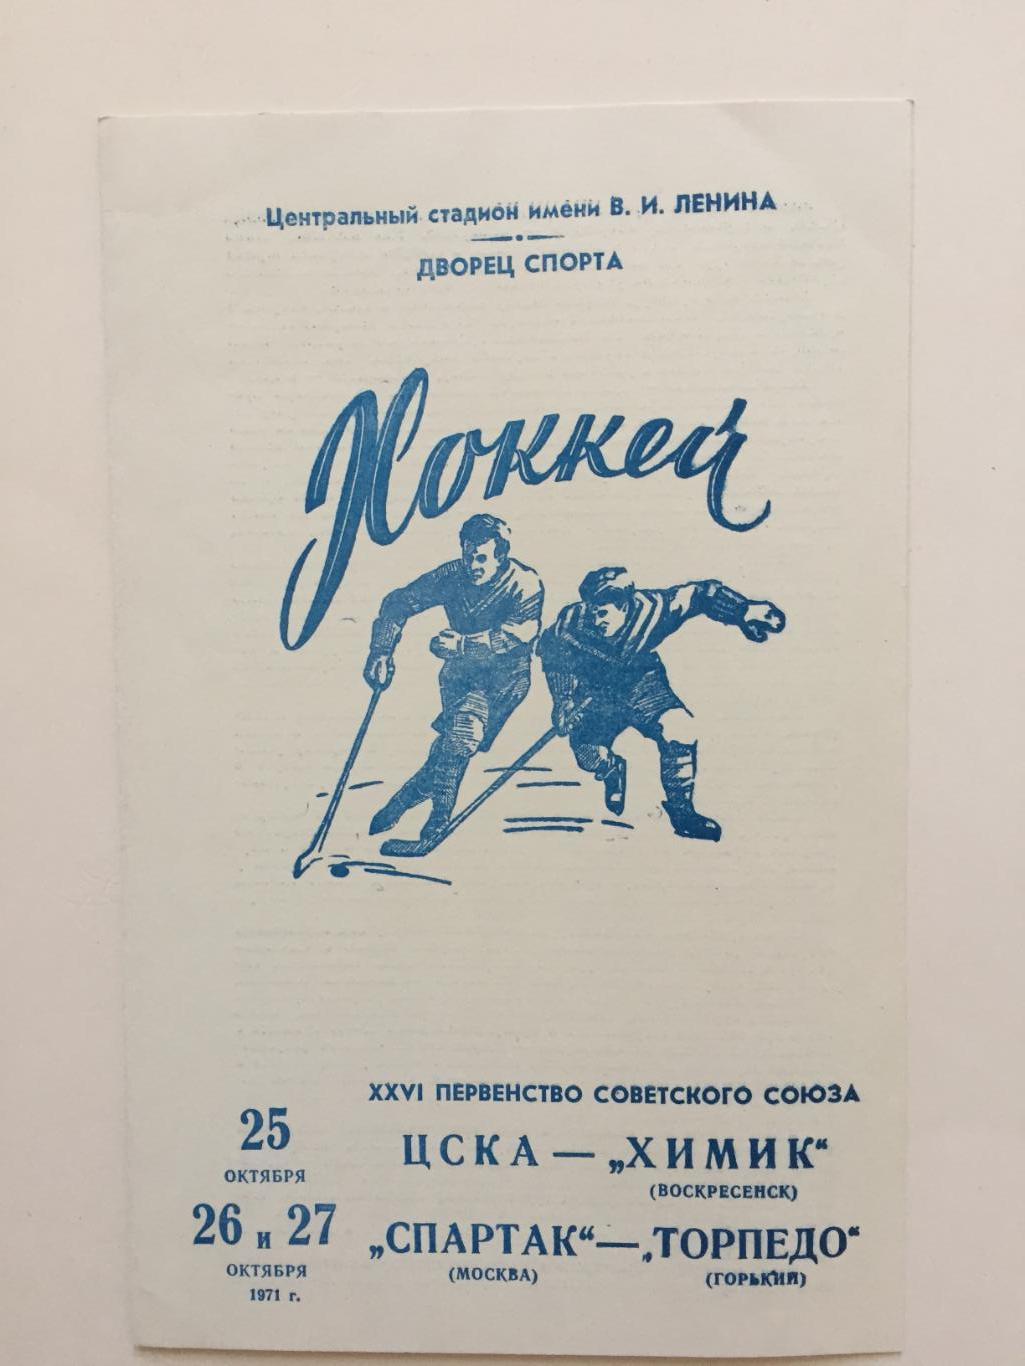 ЦСКА - Химик,Спартак(Москва) - Торпедо Горький 25,26,27.10.1971